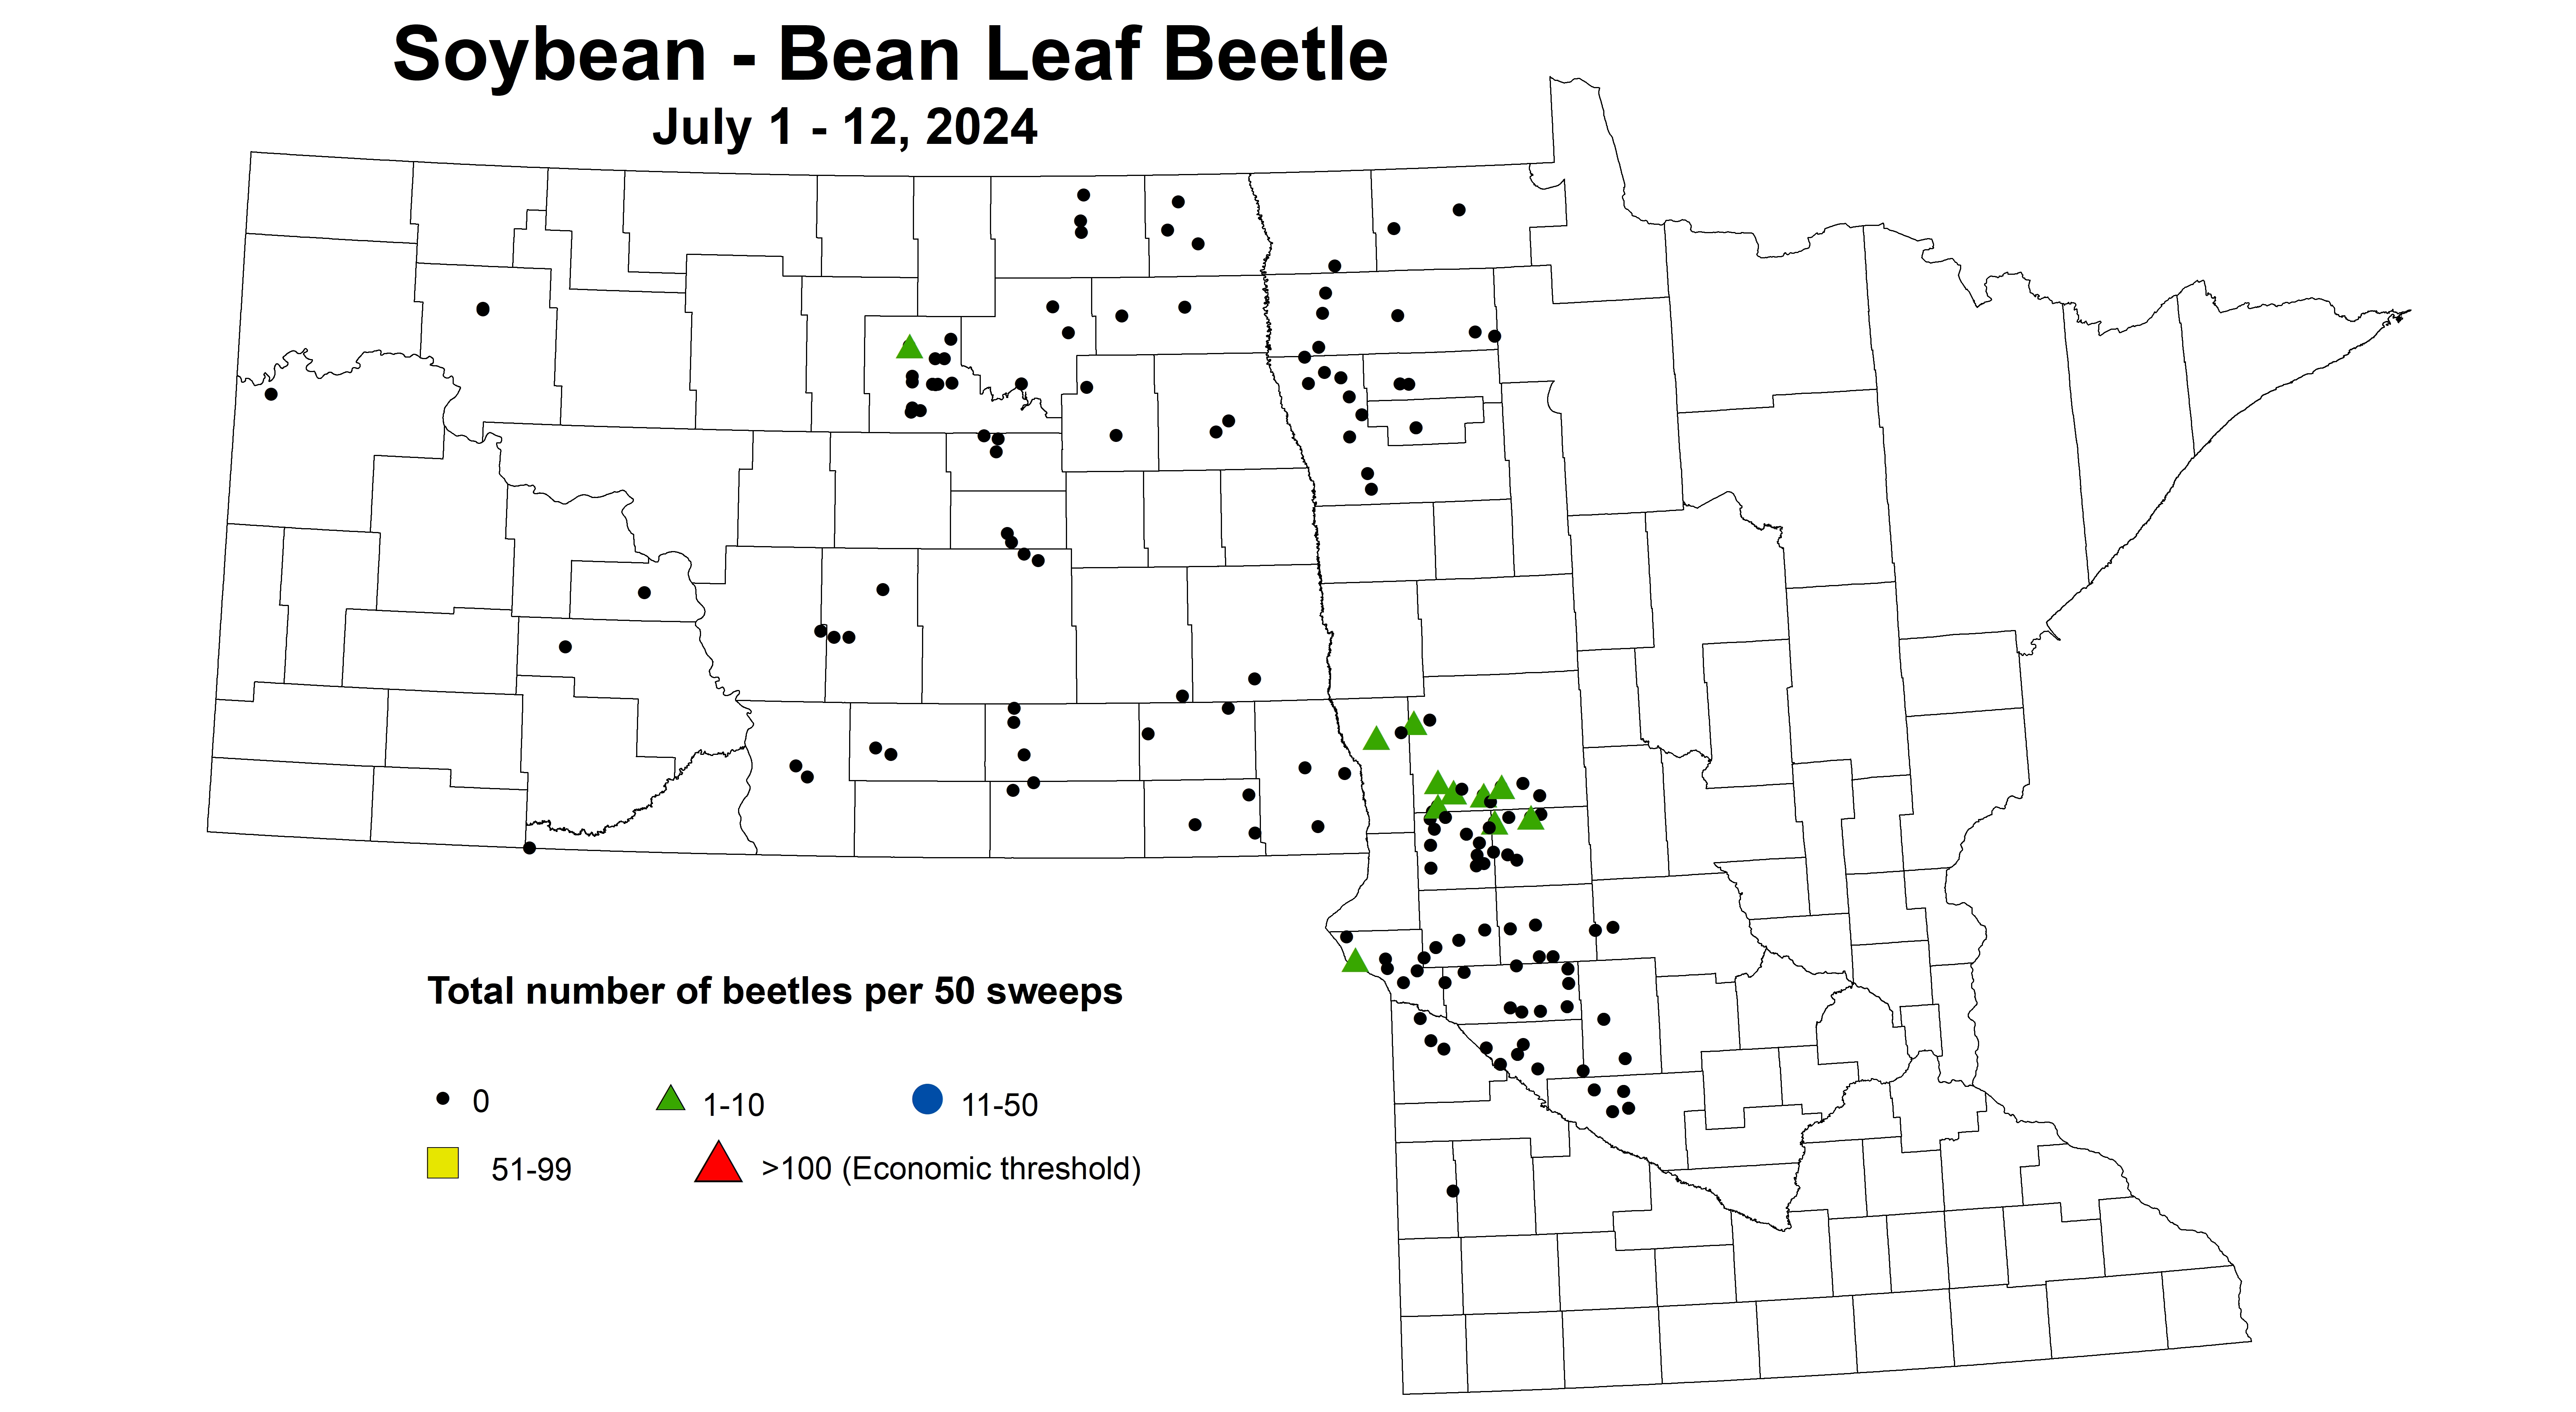 soybean BLB number per 50 sweeps July 1-12 2024